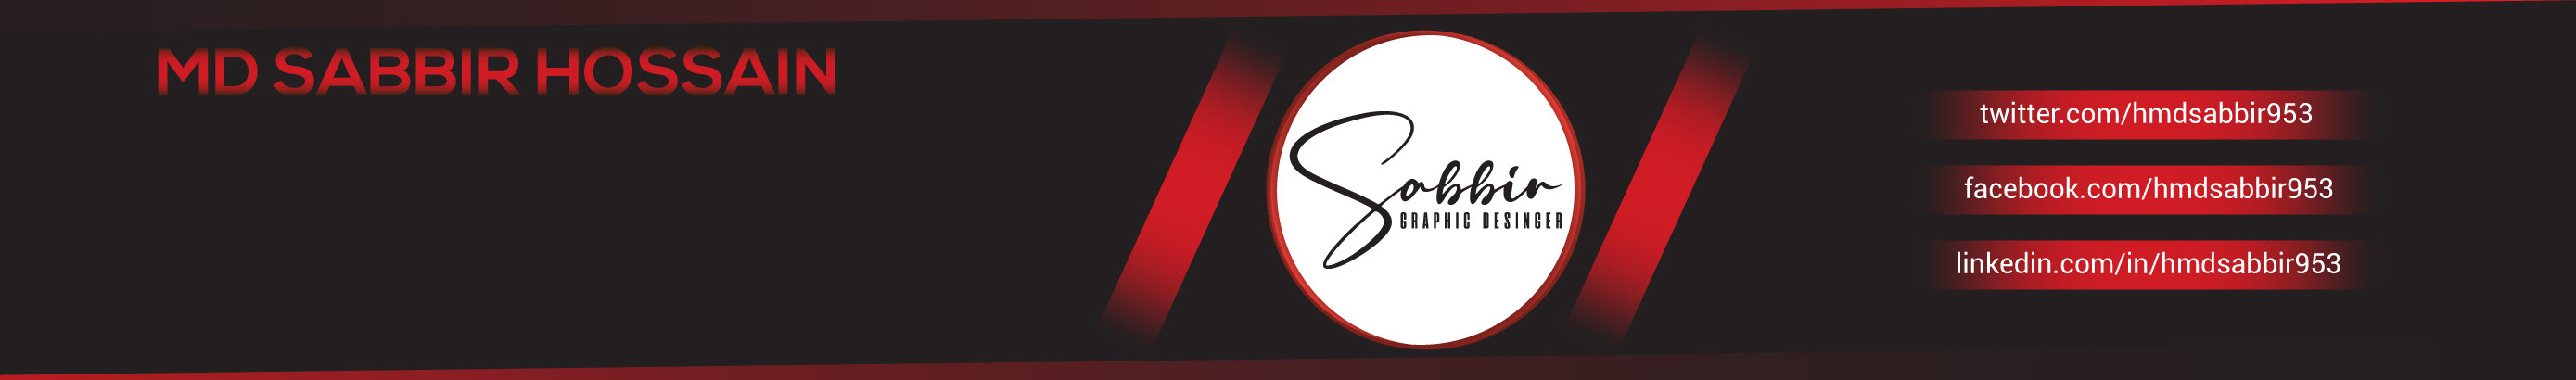 MD SABBIR HOSSAIN's profile banner